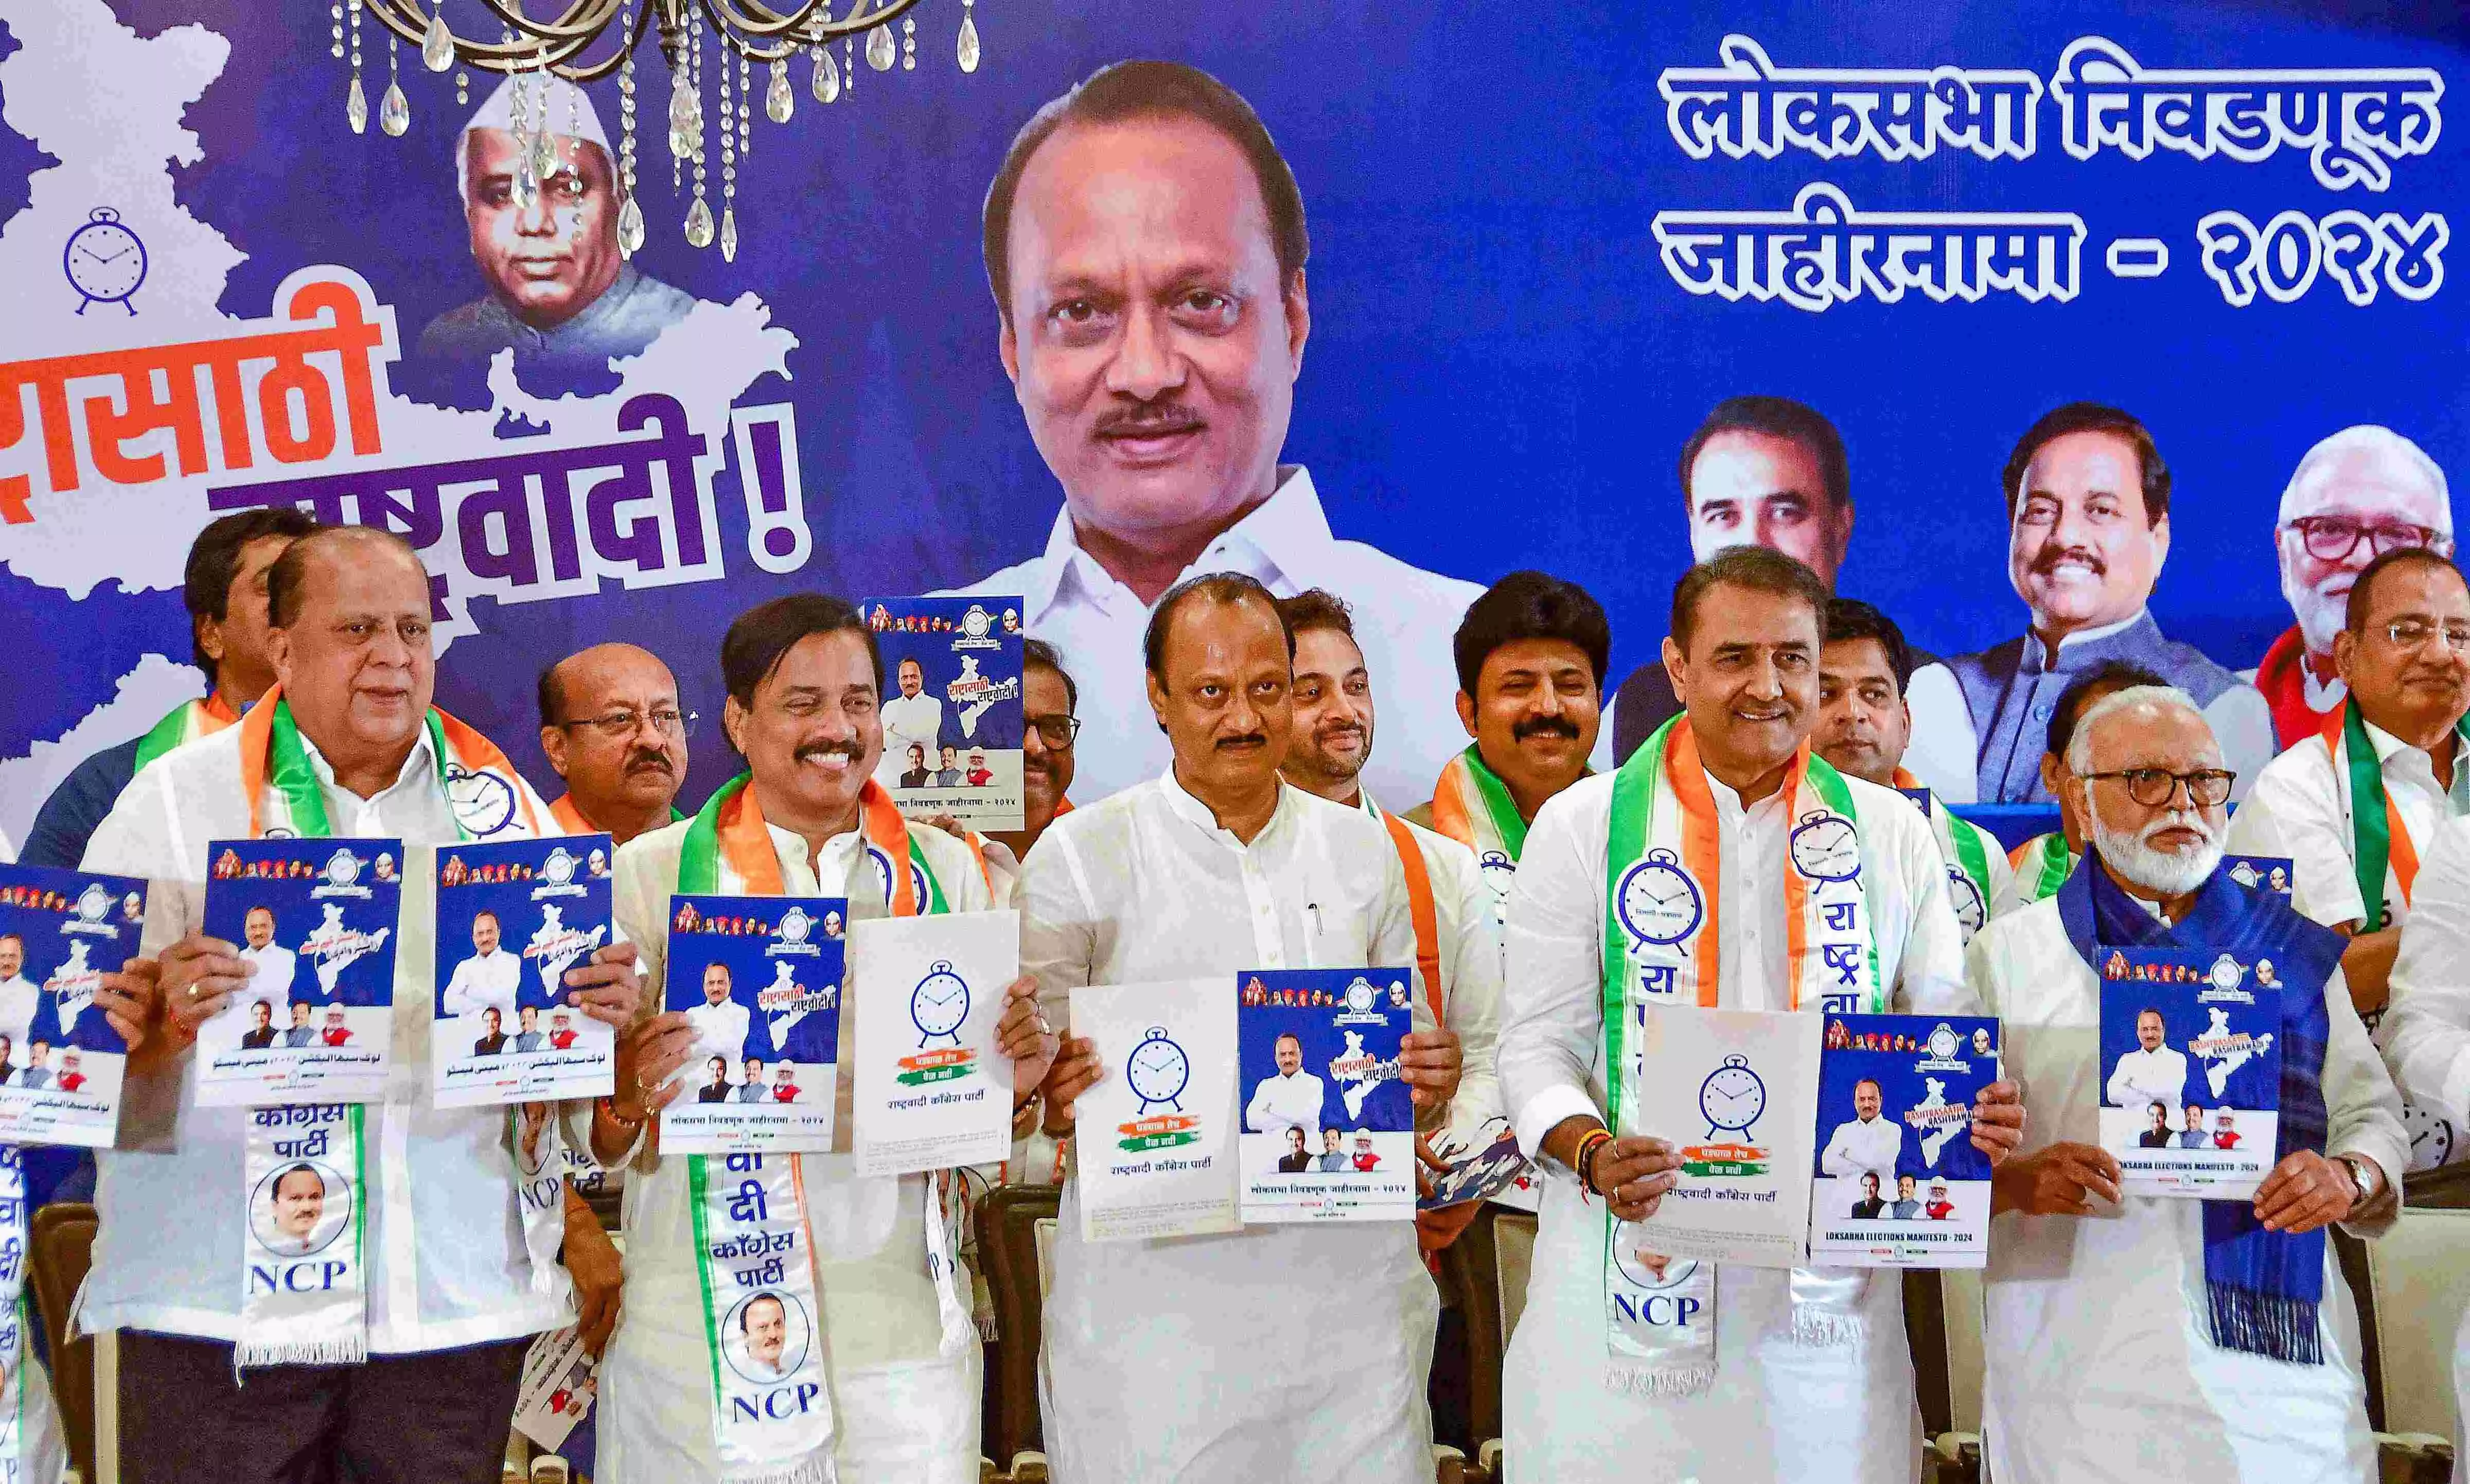 NCP (SP) manifesto favors caste census, focuses on farmers & women